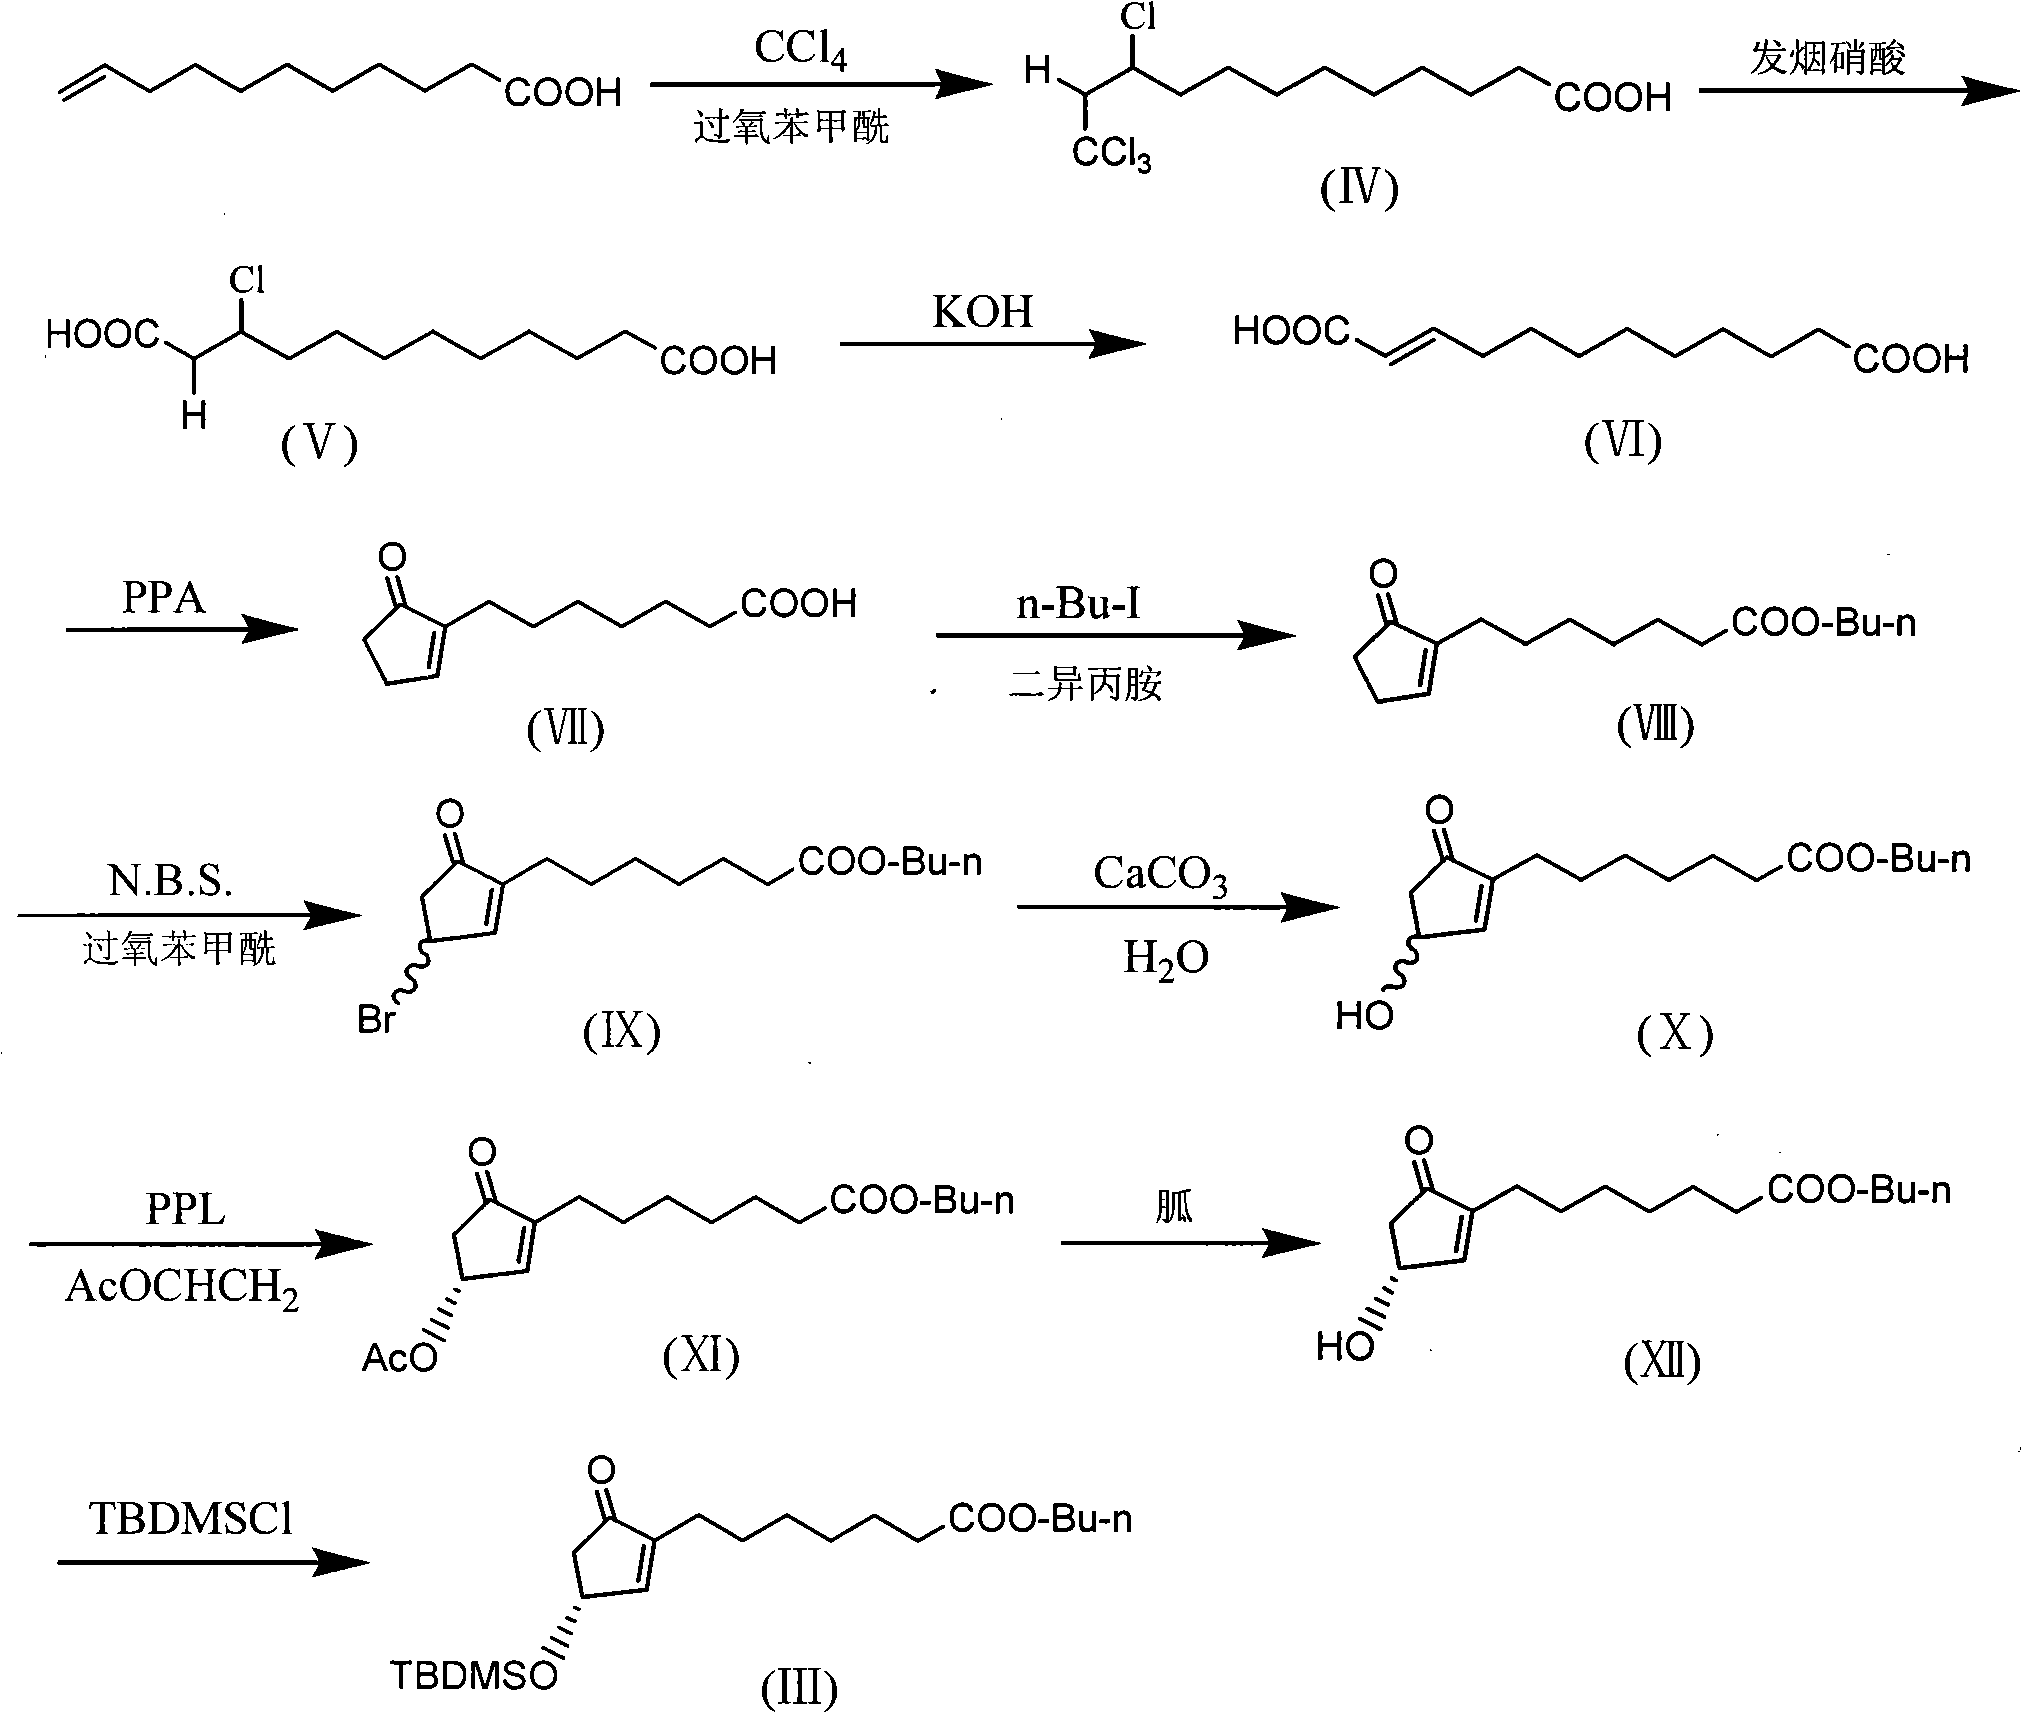 Method for preparing prostaglandin derivative